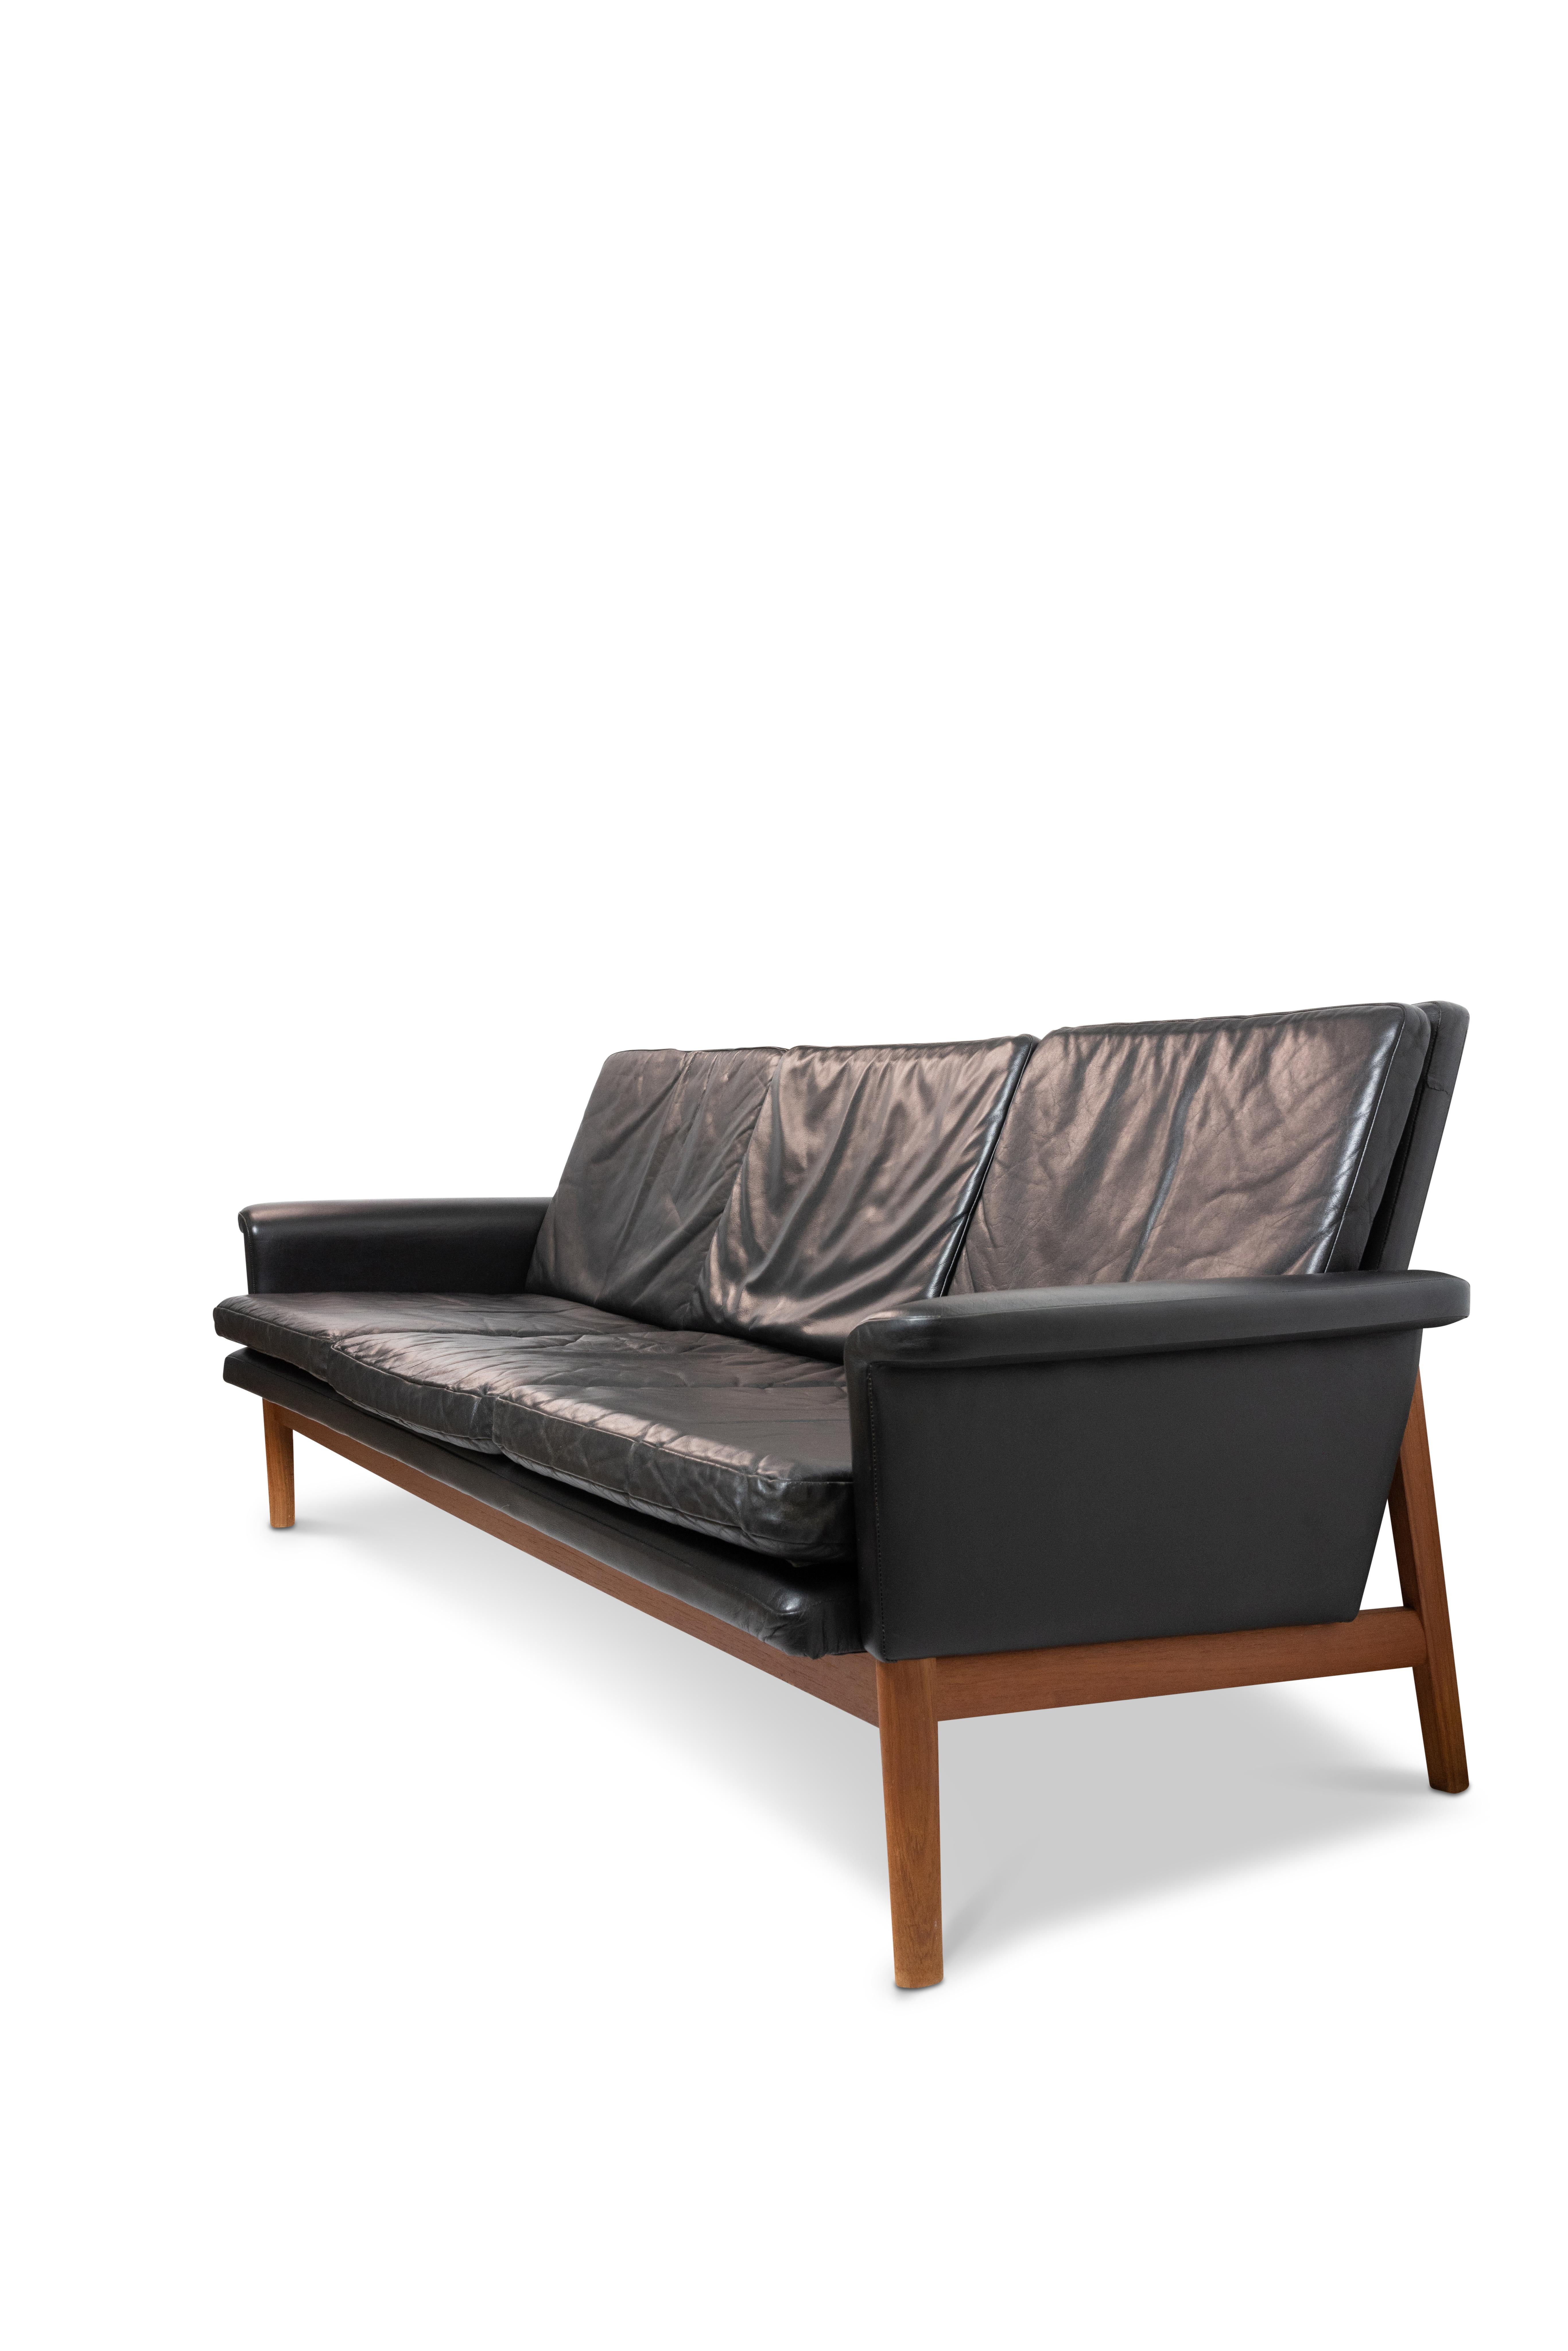 Finn Juhl Three Seat Sofa with Original Black Leather, Model 218/3, Denmark For Sale 2